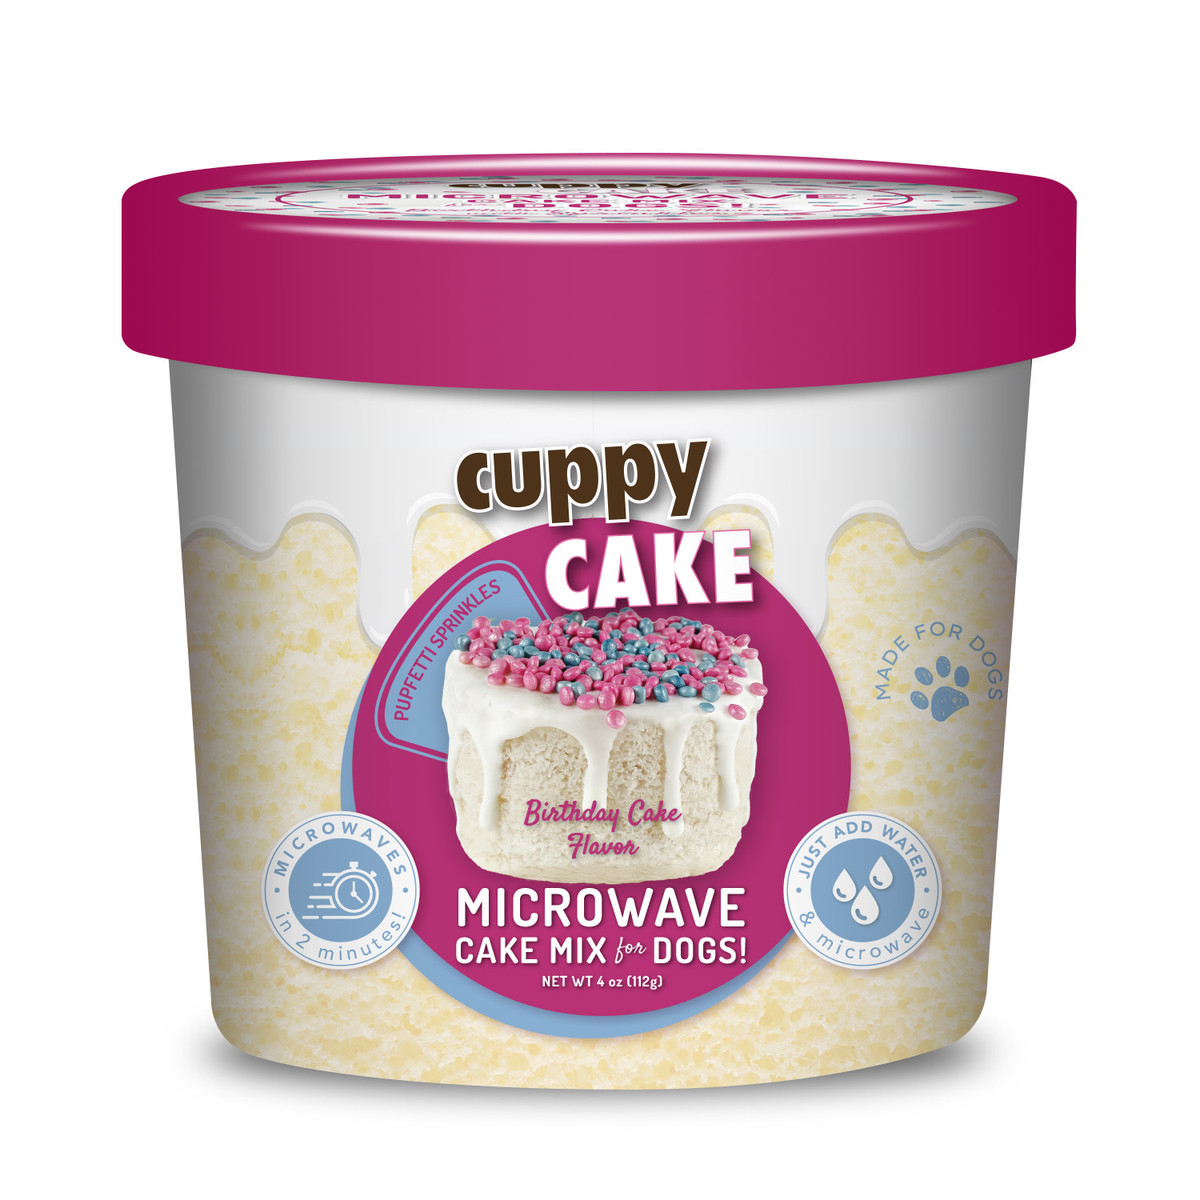 Cuppy Cake Microwave Dog Cake Mix - Birthday Cake with Pupfetti Sprinkles